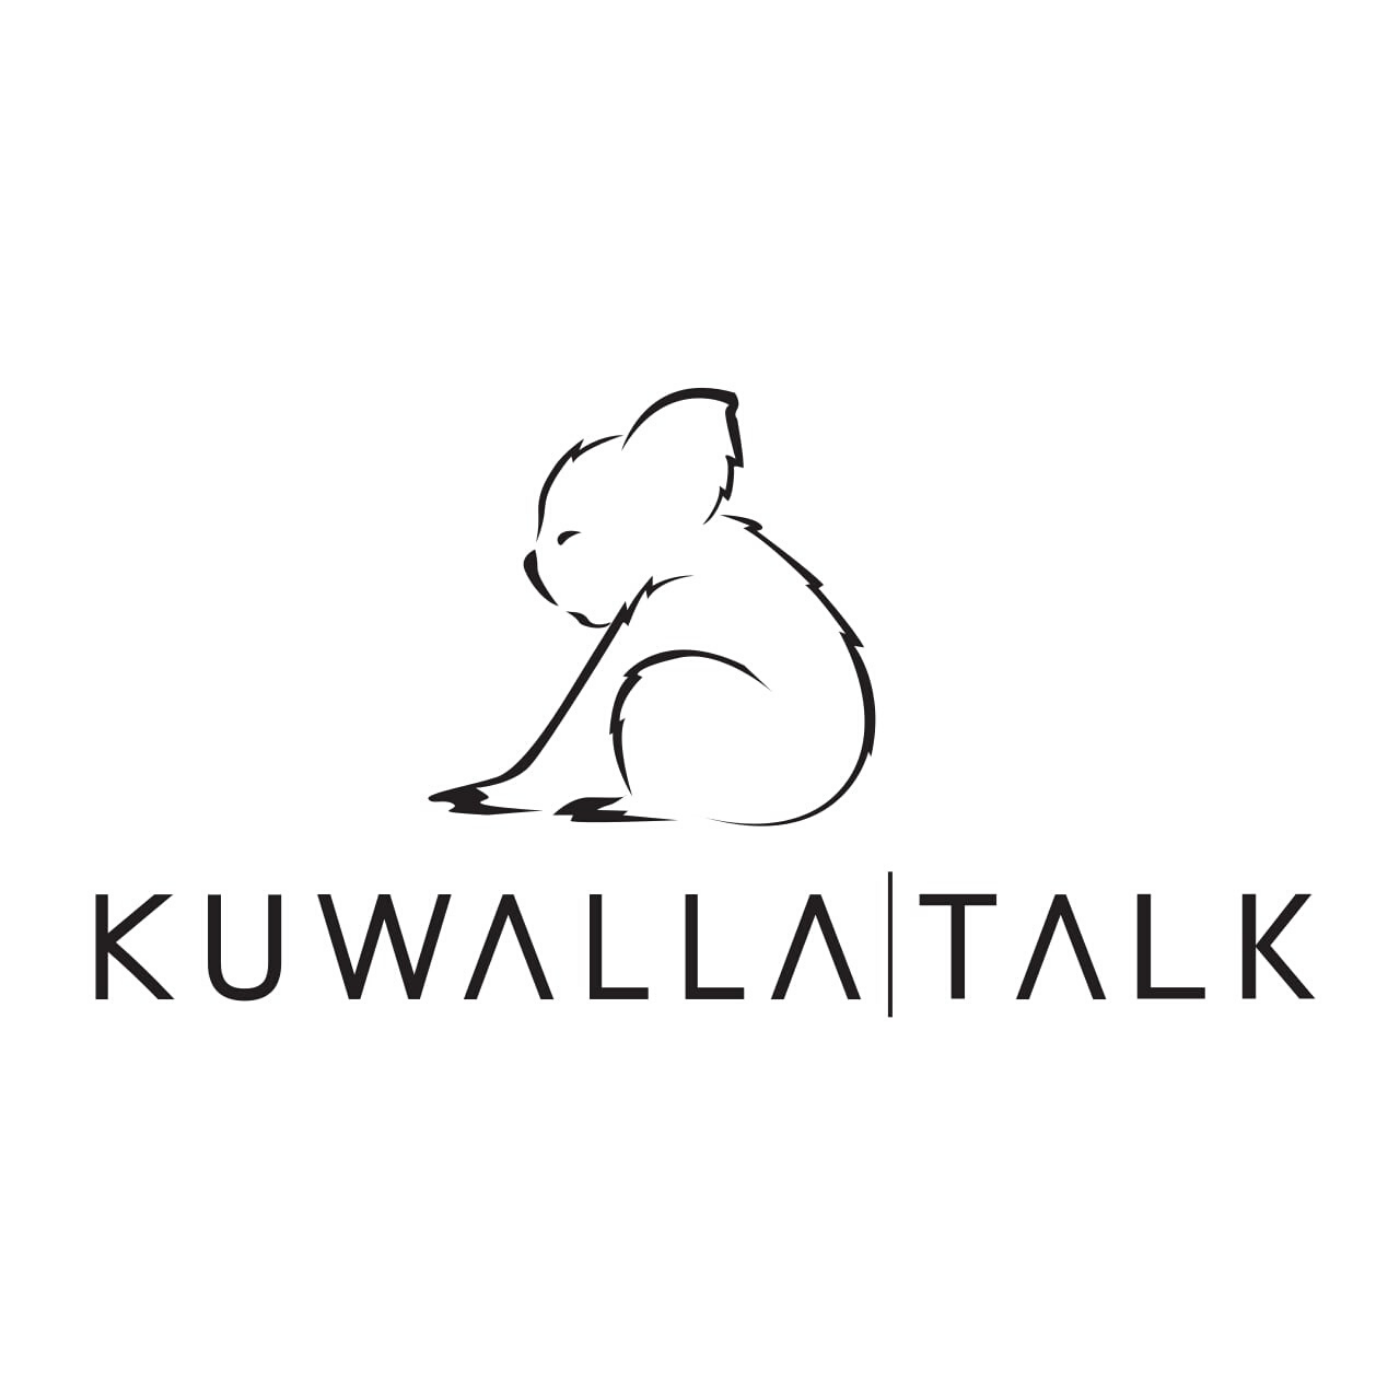 kuwalla tee Archives - Rivercast Media